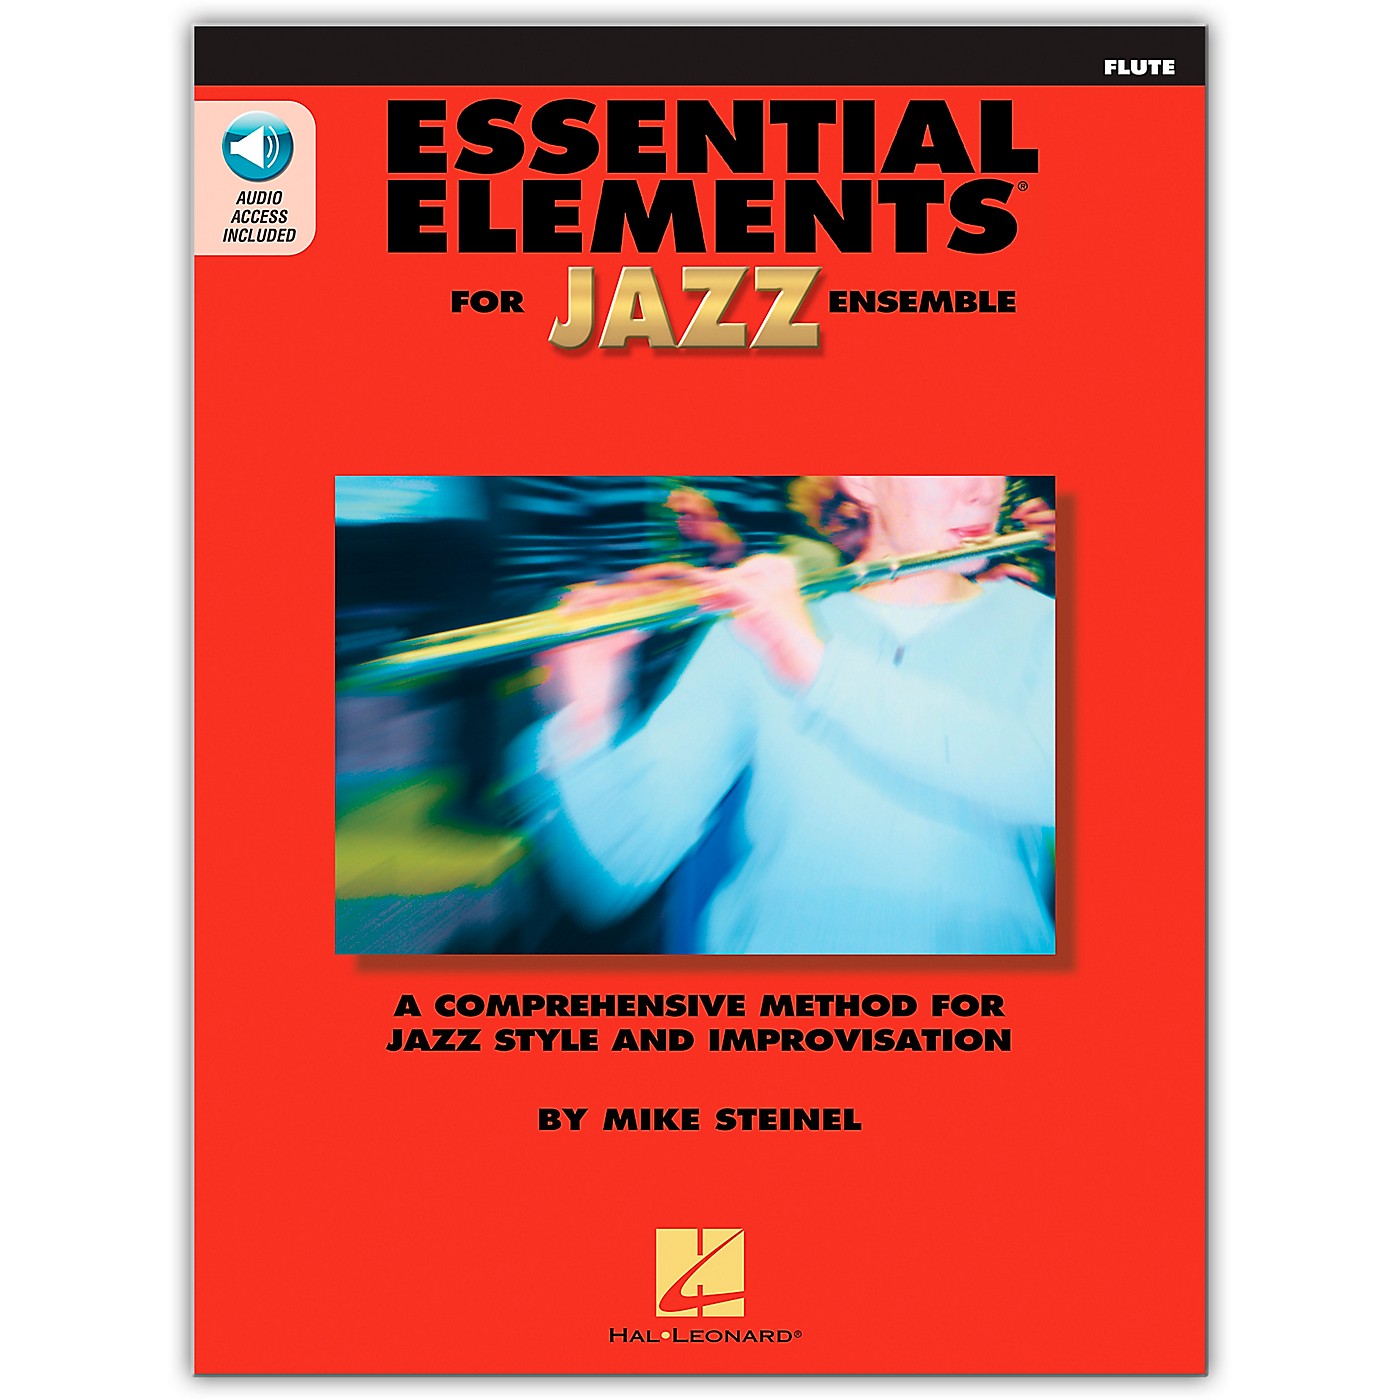 Hal Leonard Essential Elements for Jazz Ensemble - Flute (Book/Online Audio) thumbnail